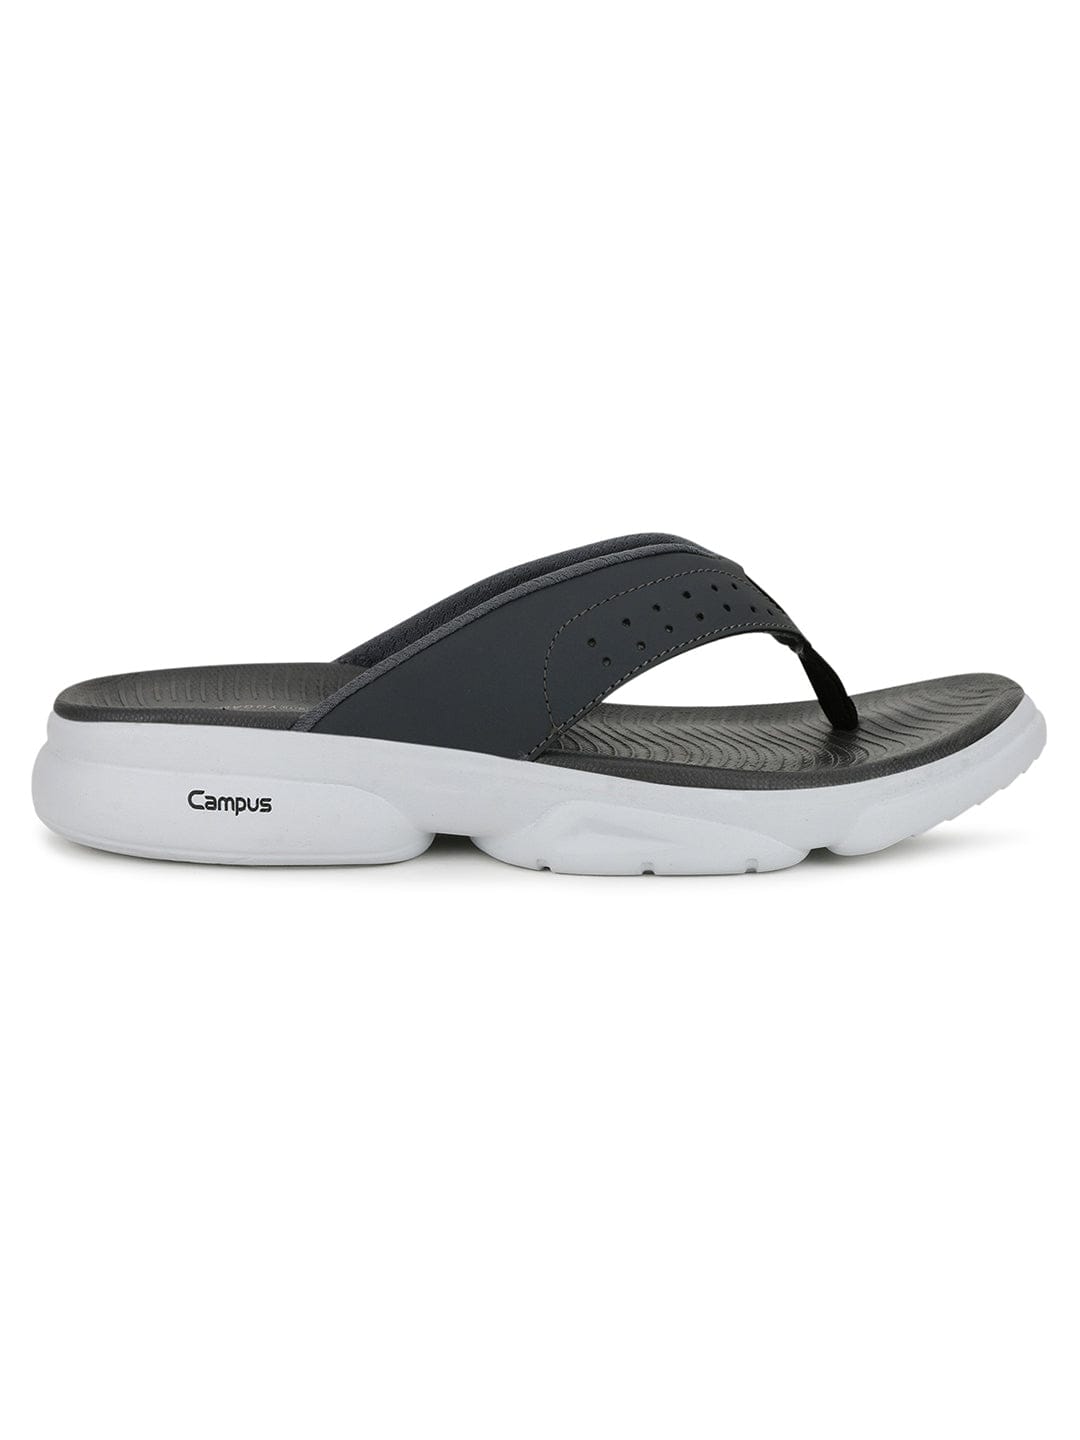 Buy GC-SL-05 Grey Men's Flip Flop online | Campus Shoes